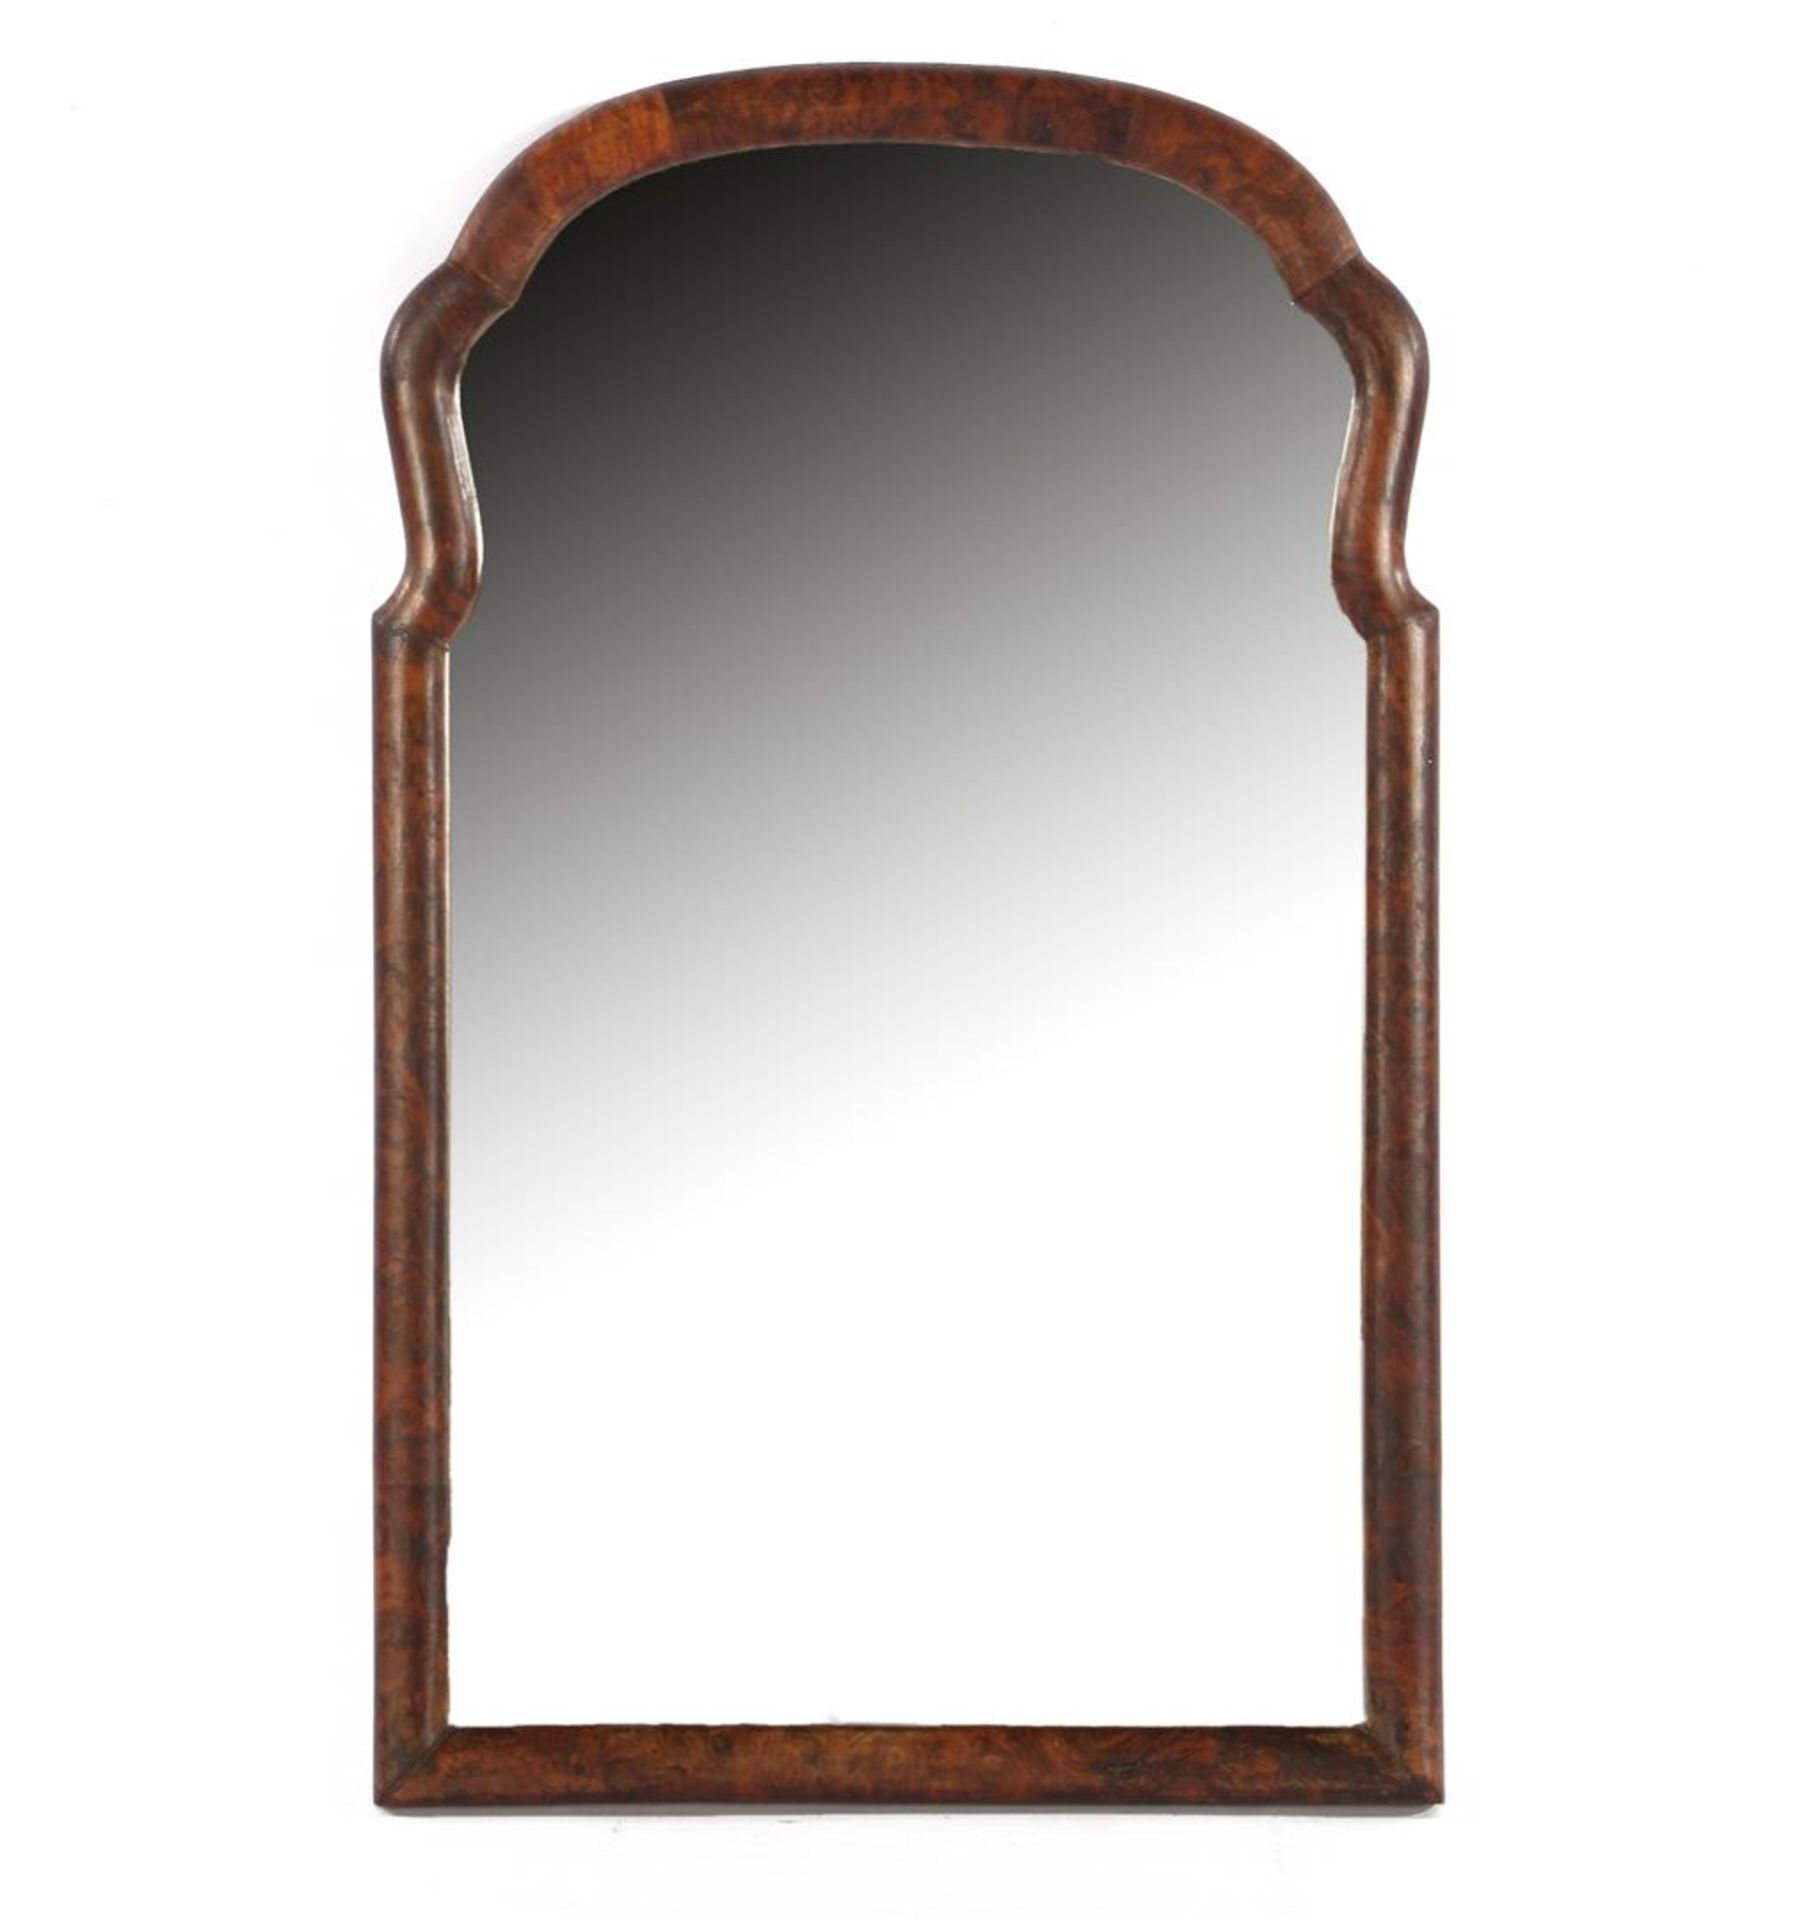 Facet-cut mirror in a burr walnut frame, so-called Soester model 55x34 cm